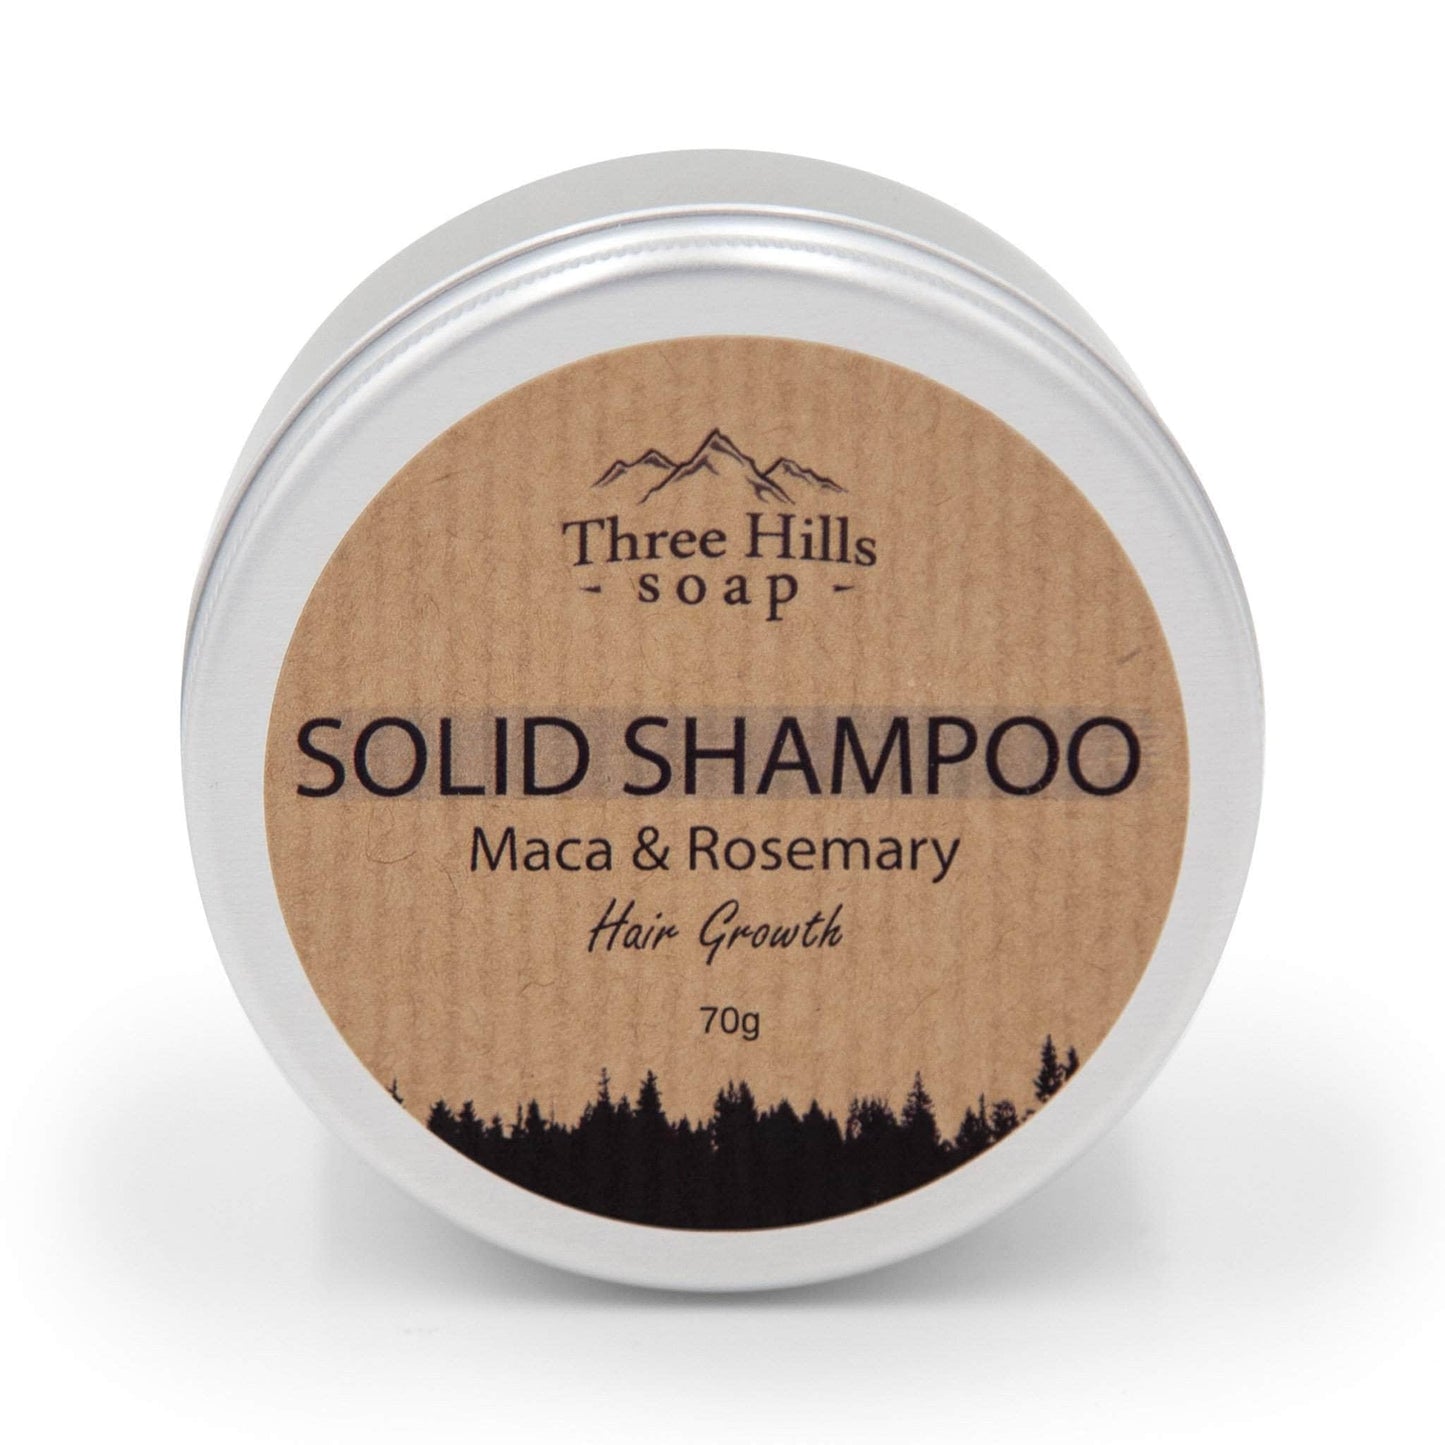 Three Hill Soaps Shampoo Three Hills Soap - Solid Shampoo for Hair Growth - Maca & Rosemary